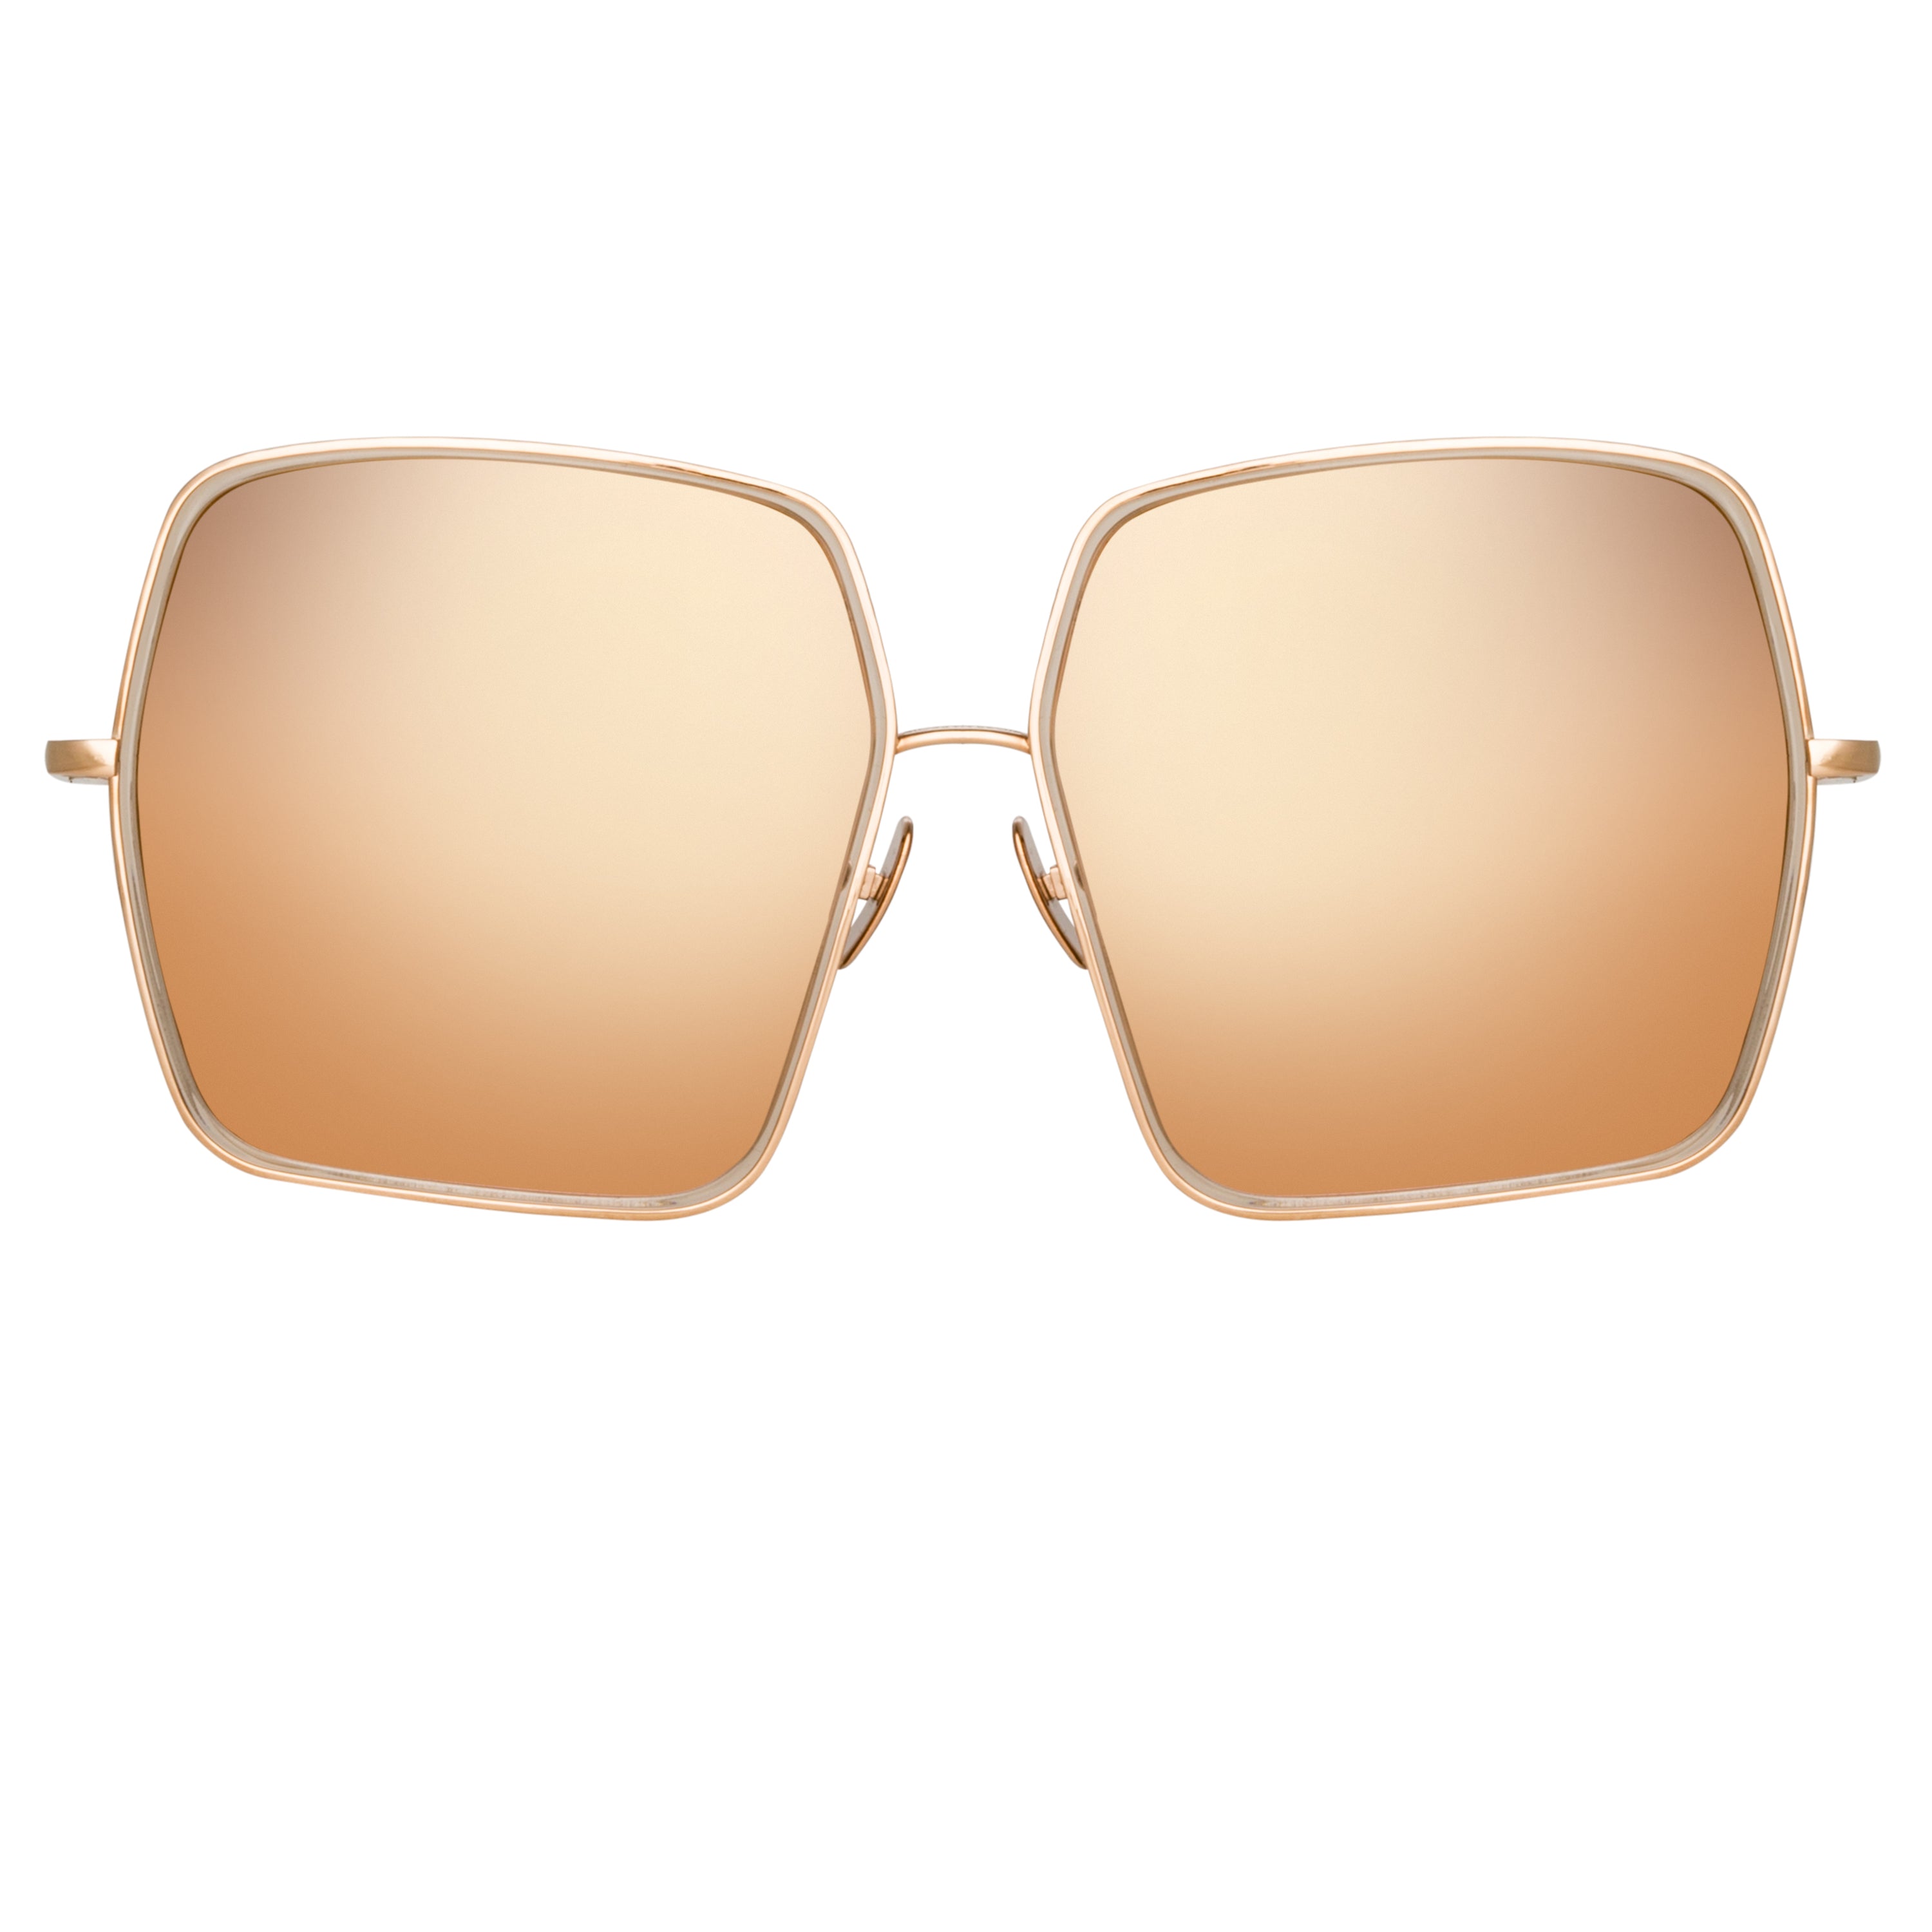 Camaro Oversized Sunglasses in Rose Gold